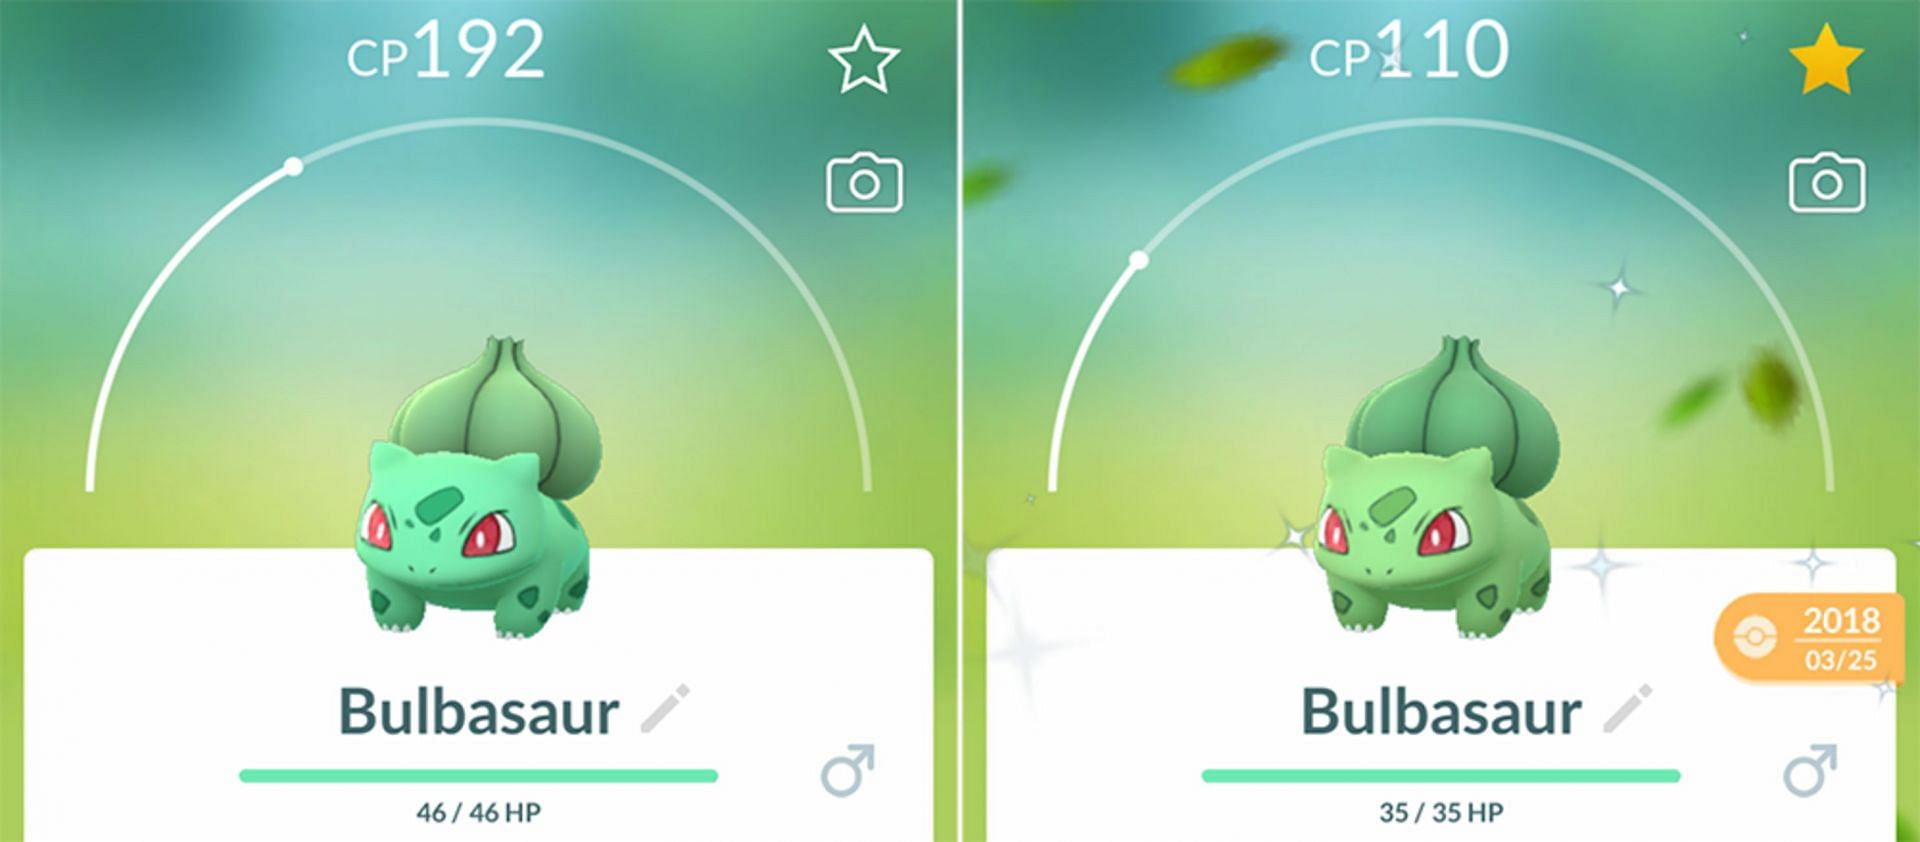 Pokemon Go: How to Catch Shiny Bulbasaur